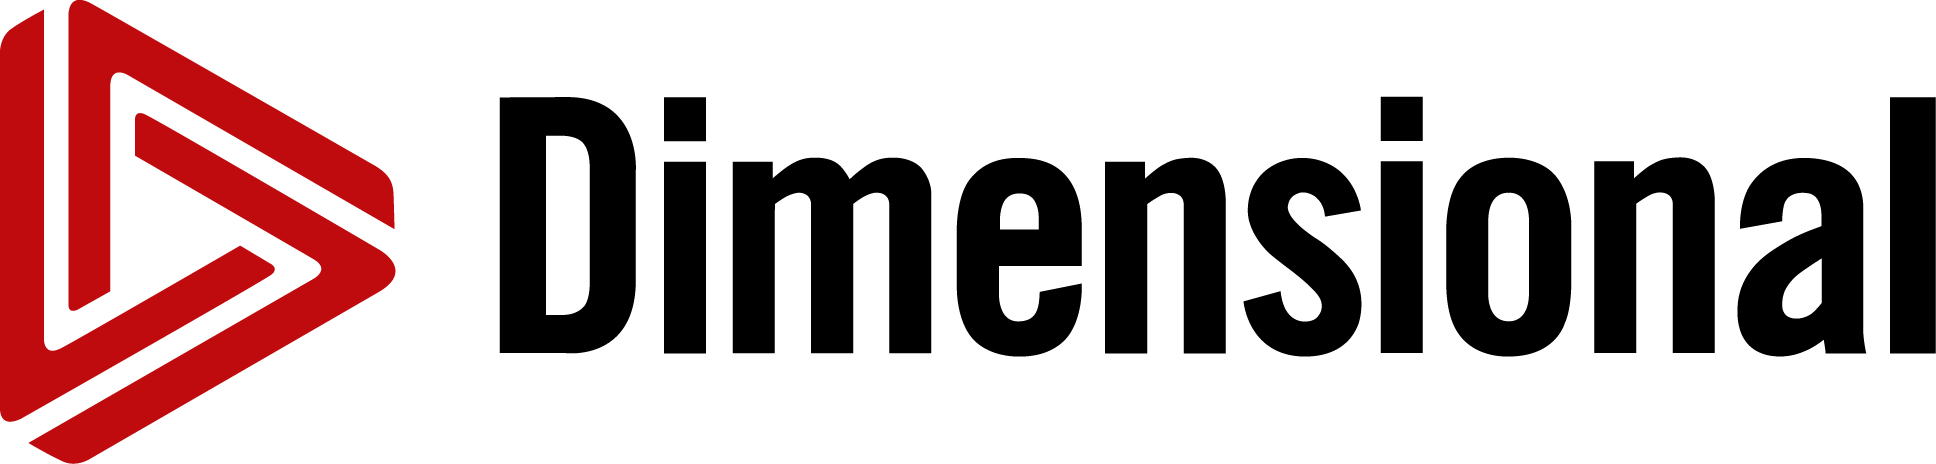 Dimensional Fund Advisors logo